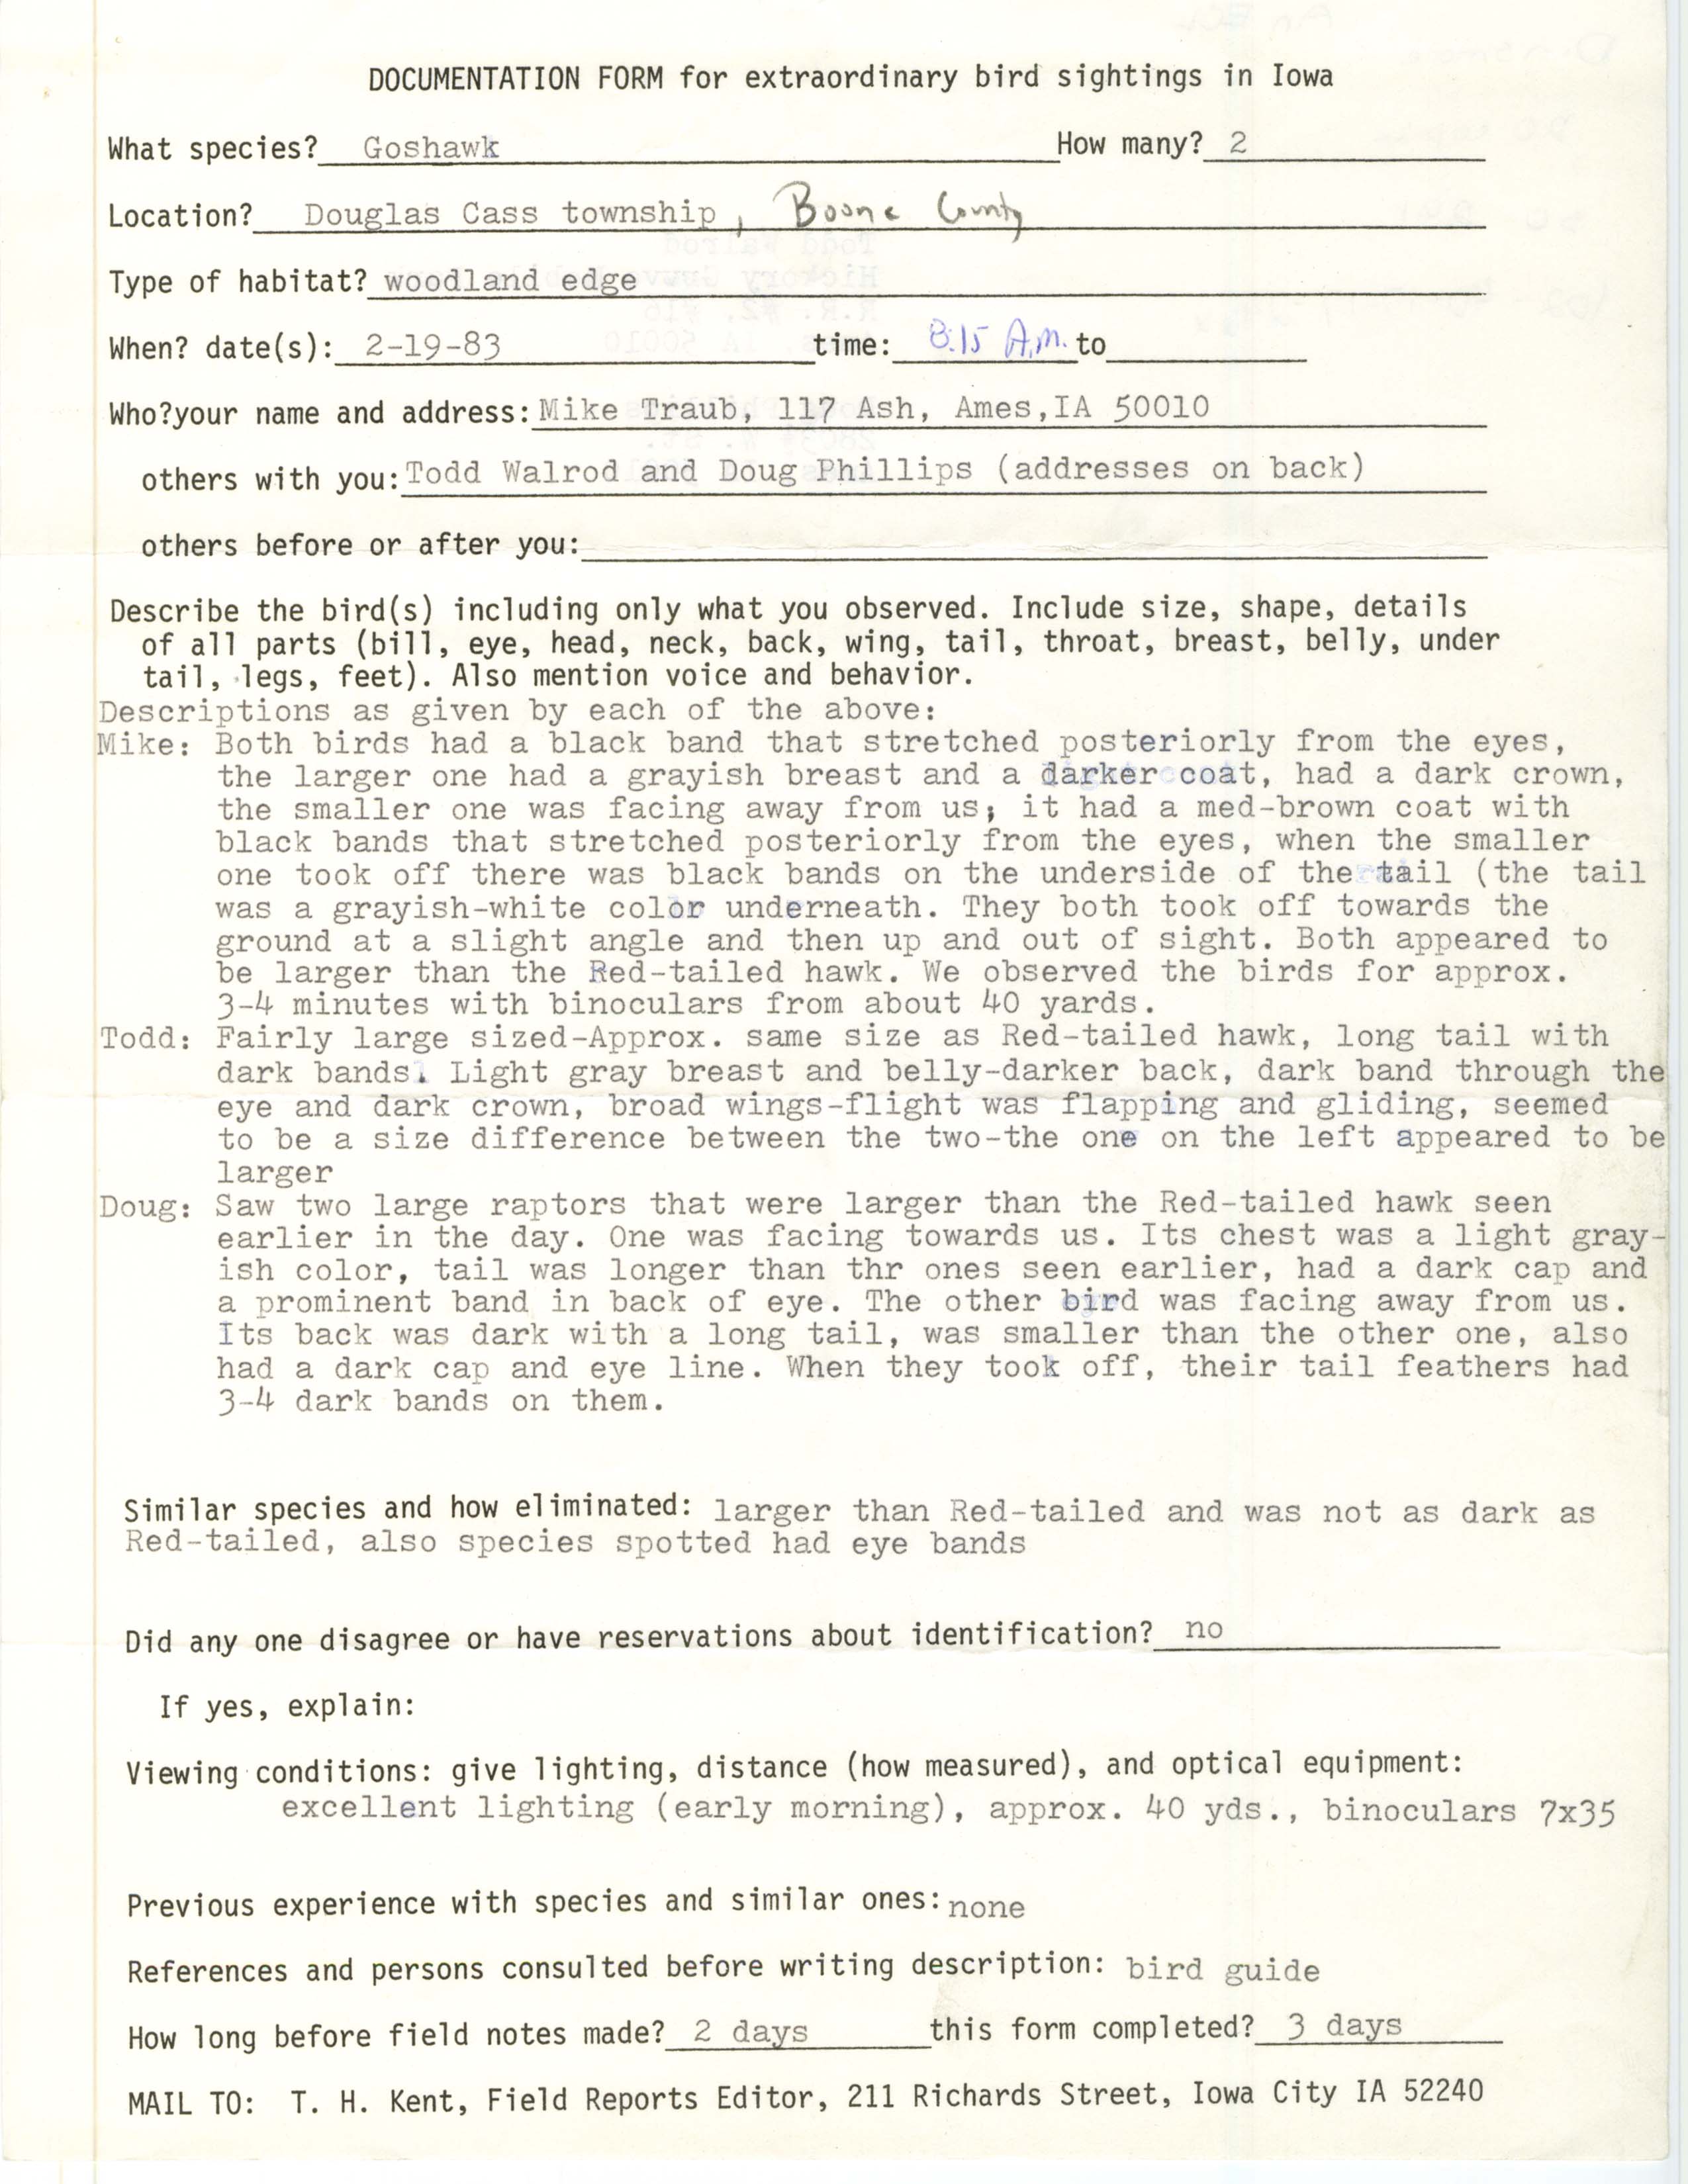 Rare bird documentation form for Northern Goshawk at Douglas Cass Township, 1983